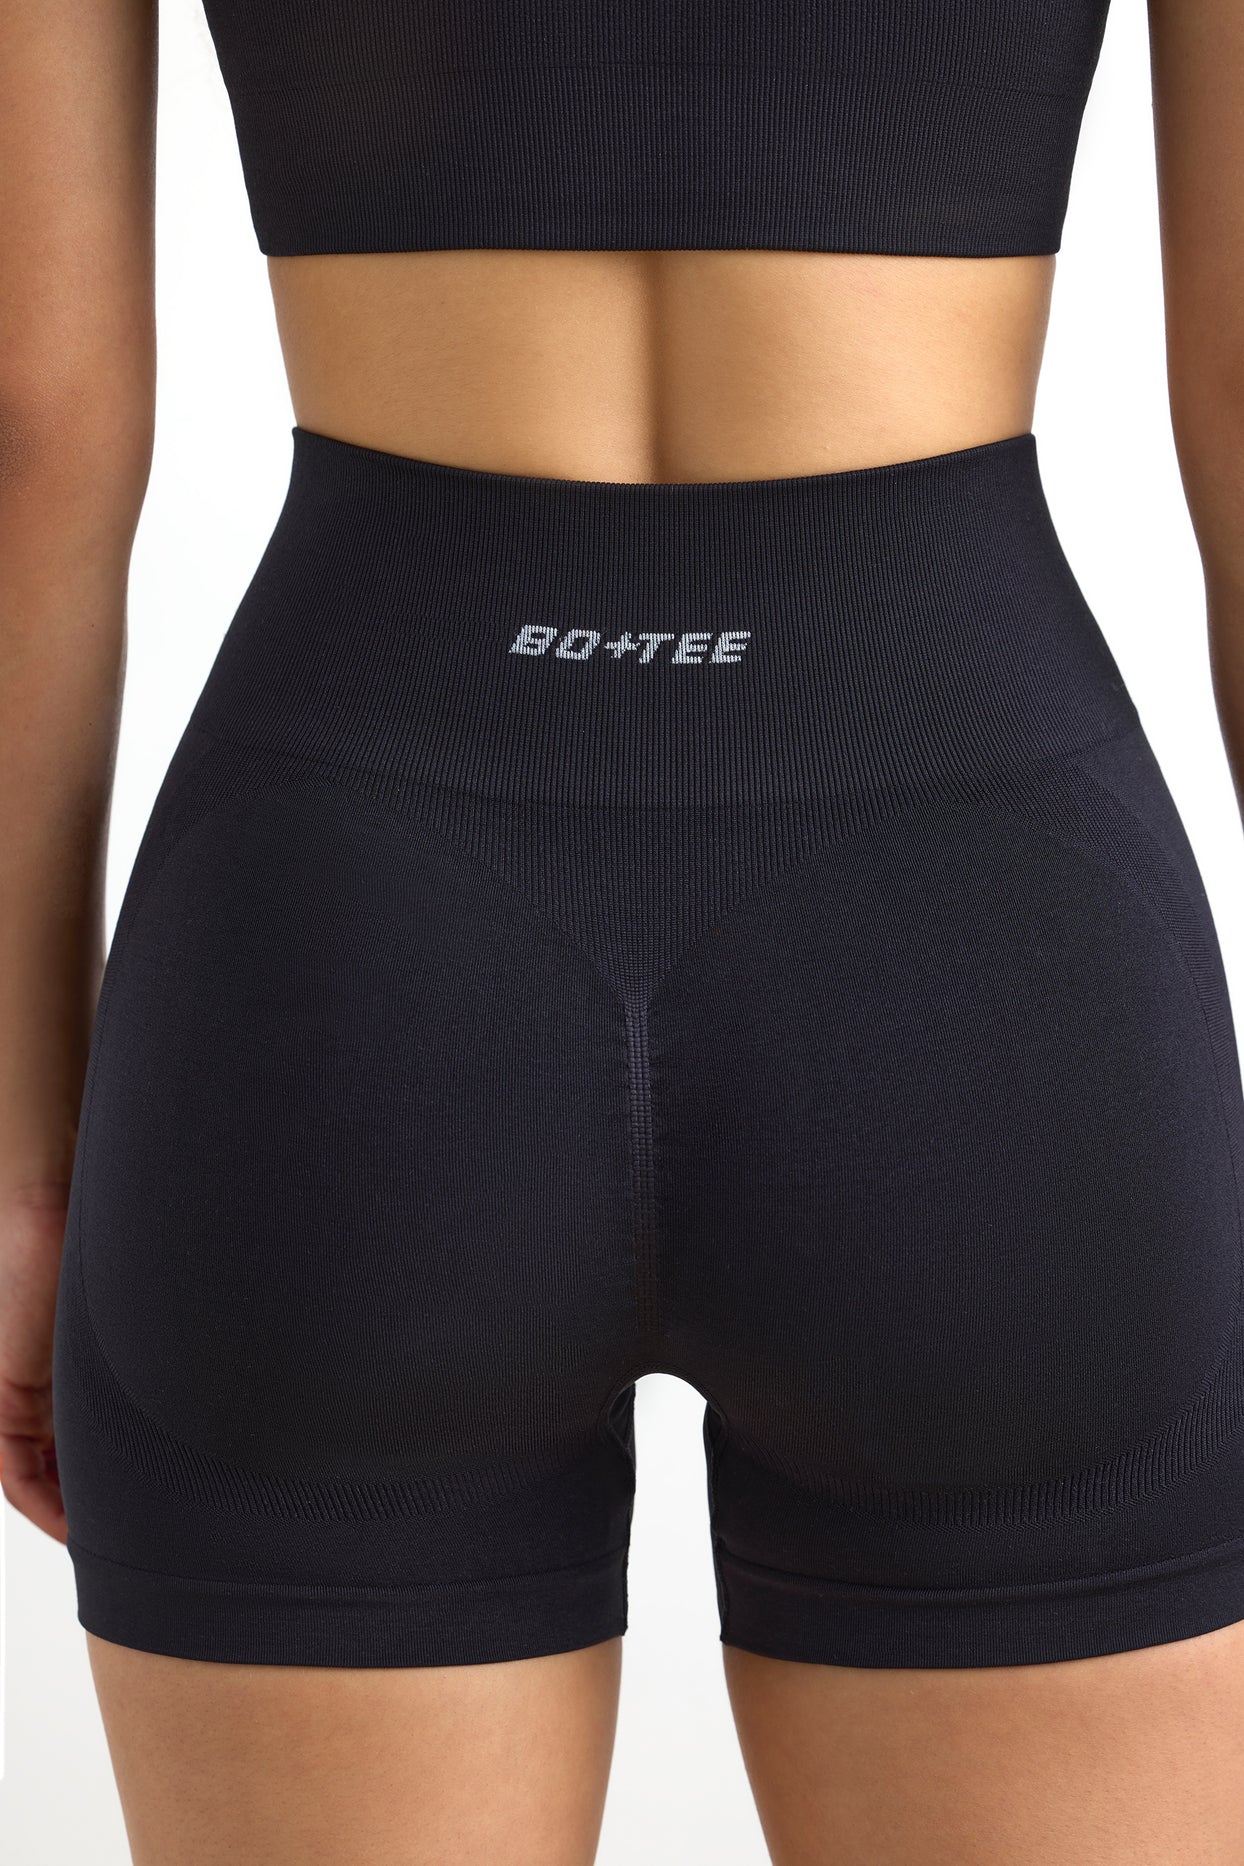 Define Luxe High Waist Mini Shorts in Jet Black